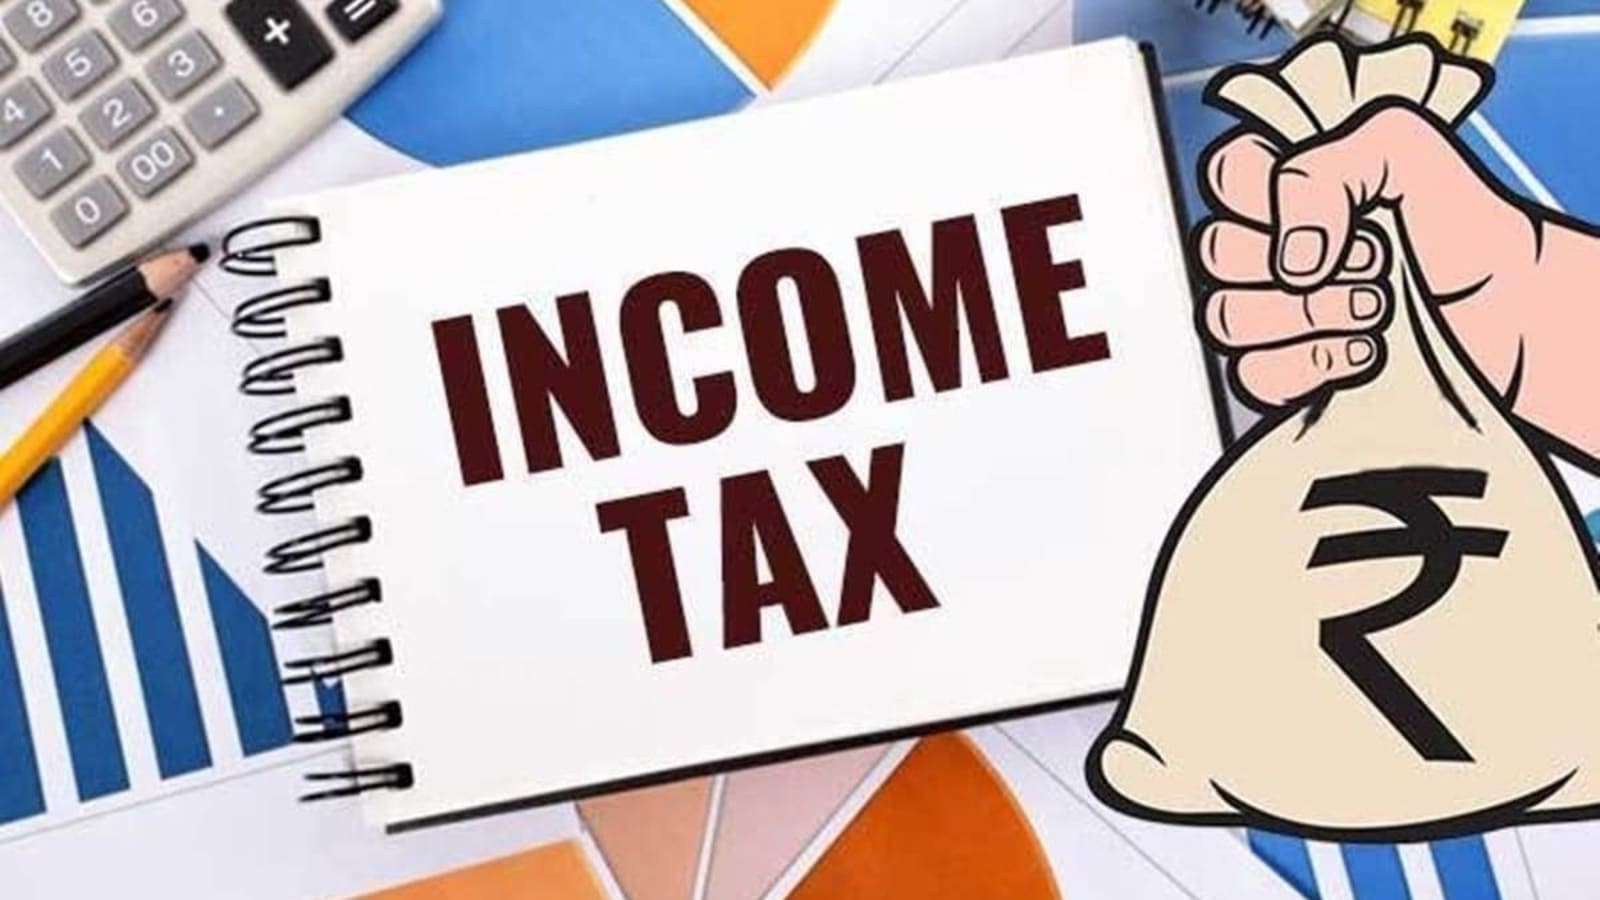 itr-income-tax-return-deadline-tomorrow-file-it-immediately-to-avoid